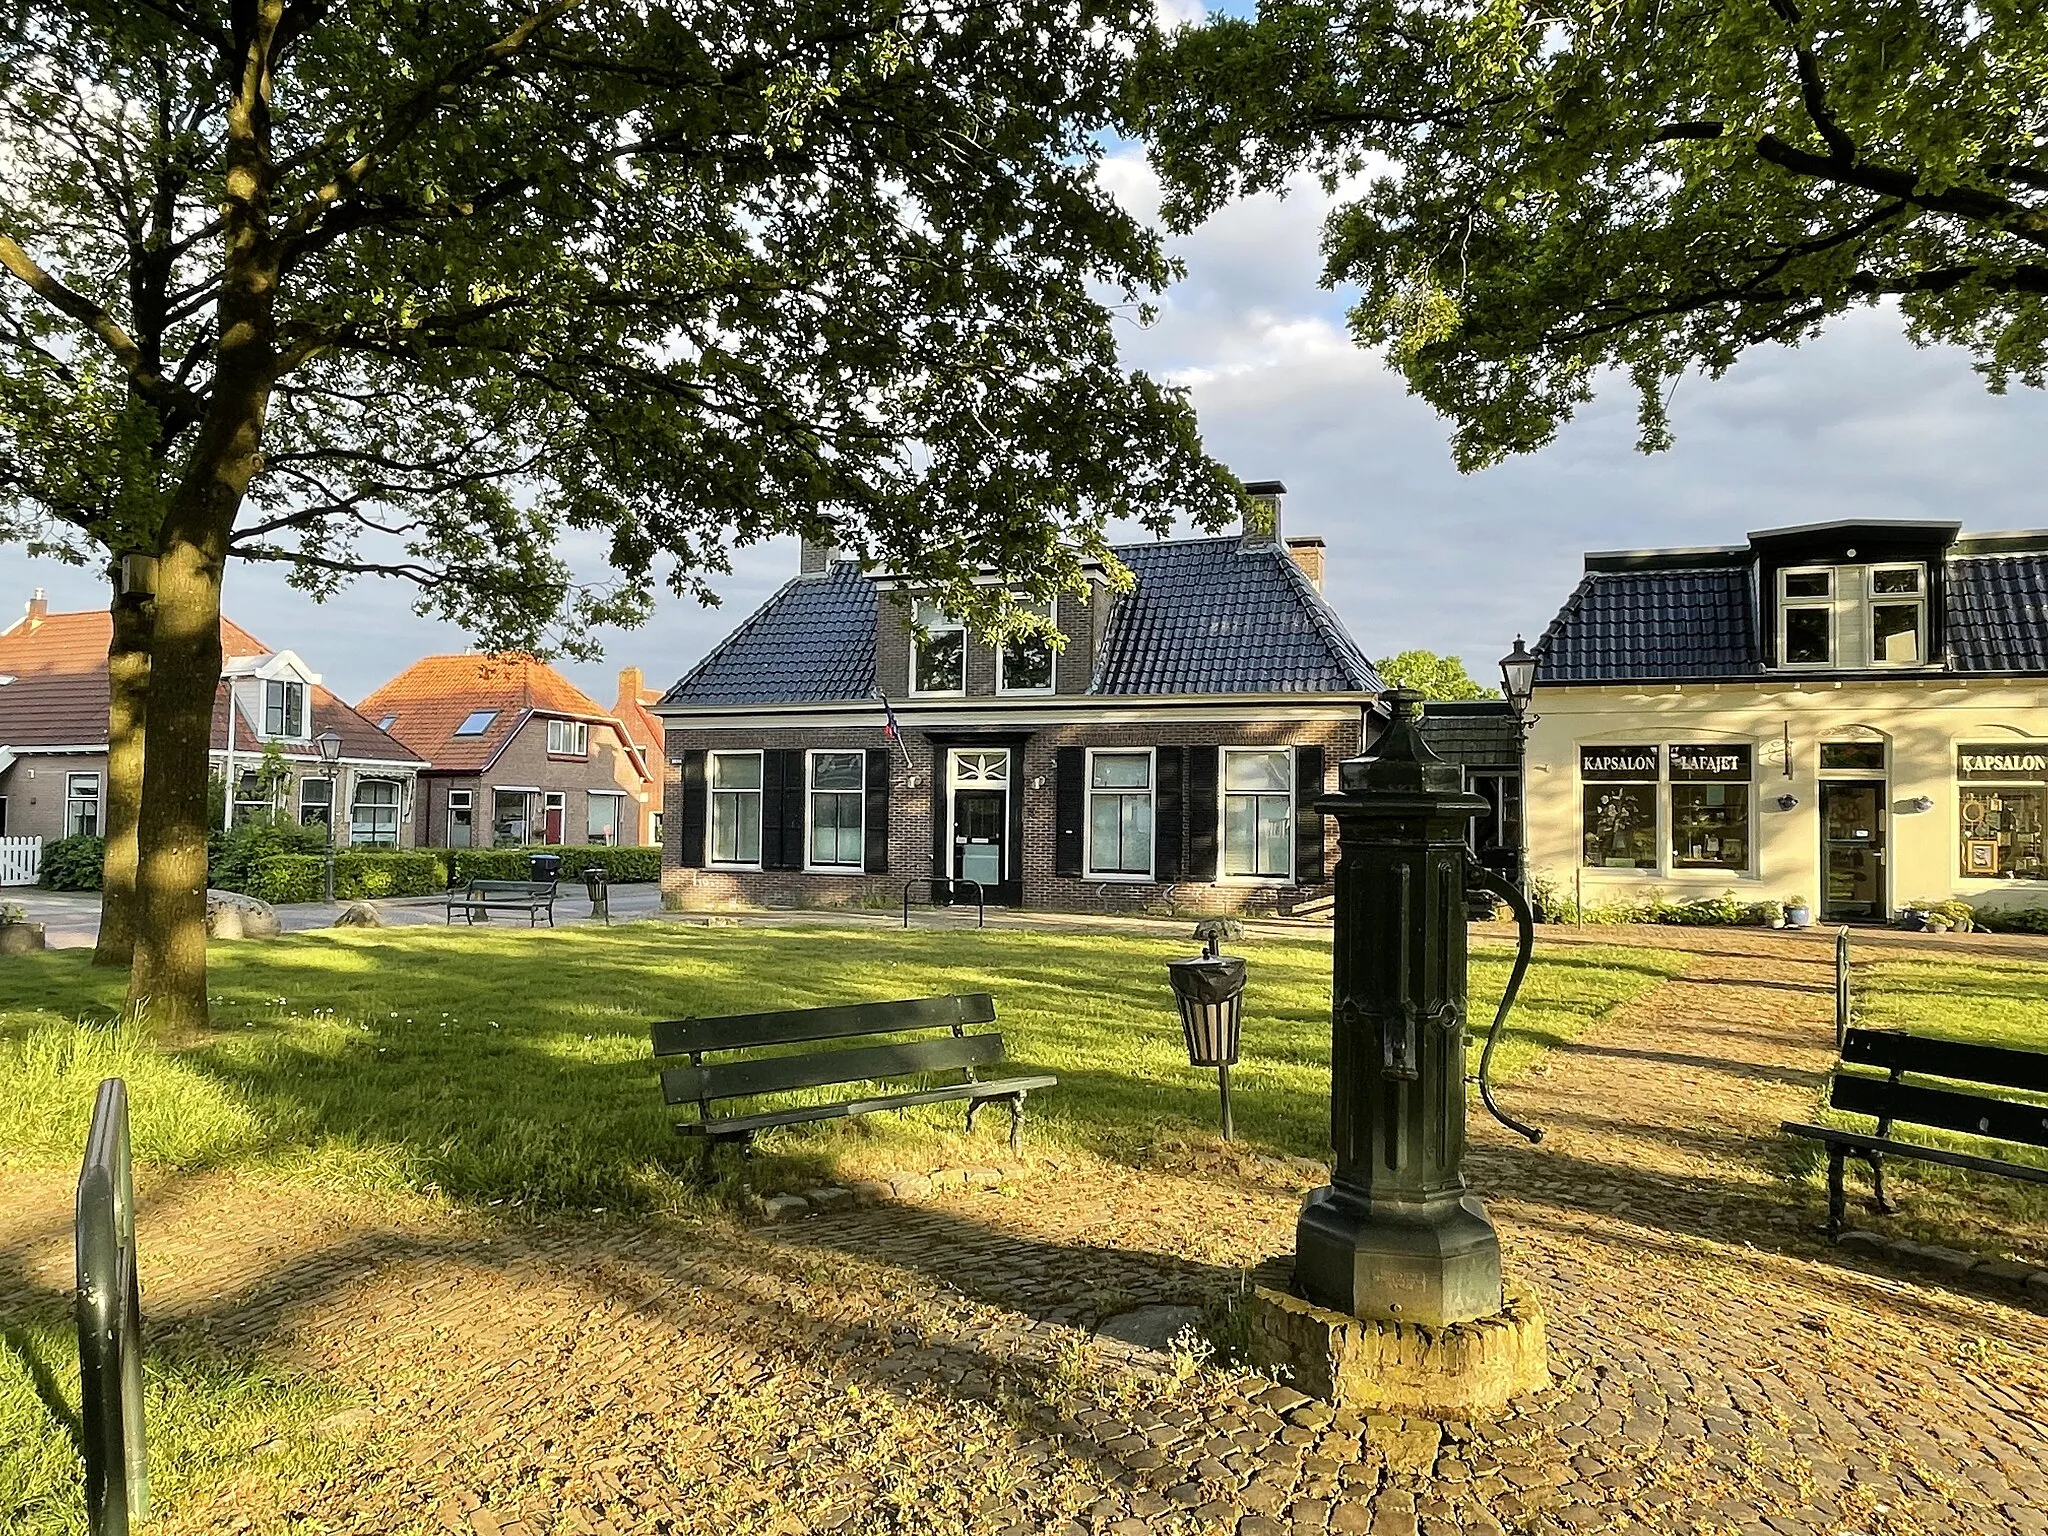 Photo showing: The Brink (village green) in Makkinga (Friesland, Netherlands).